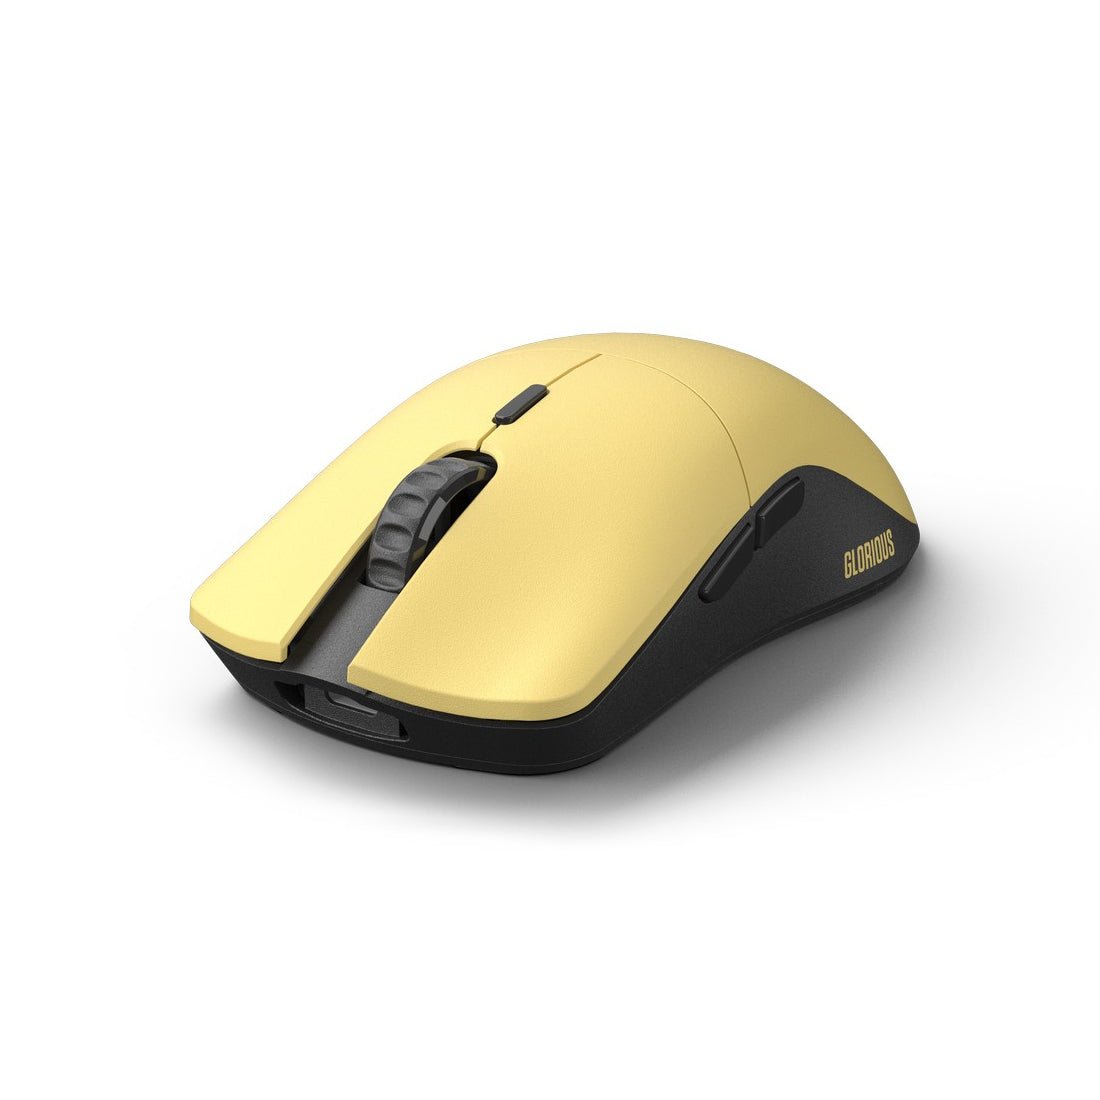 Glorious Model O PRO Wireless Mouse - Golden Panda - فأرة - Store 974 | ستور ٩٧٤